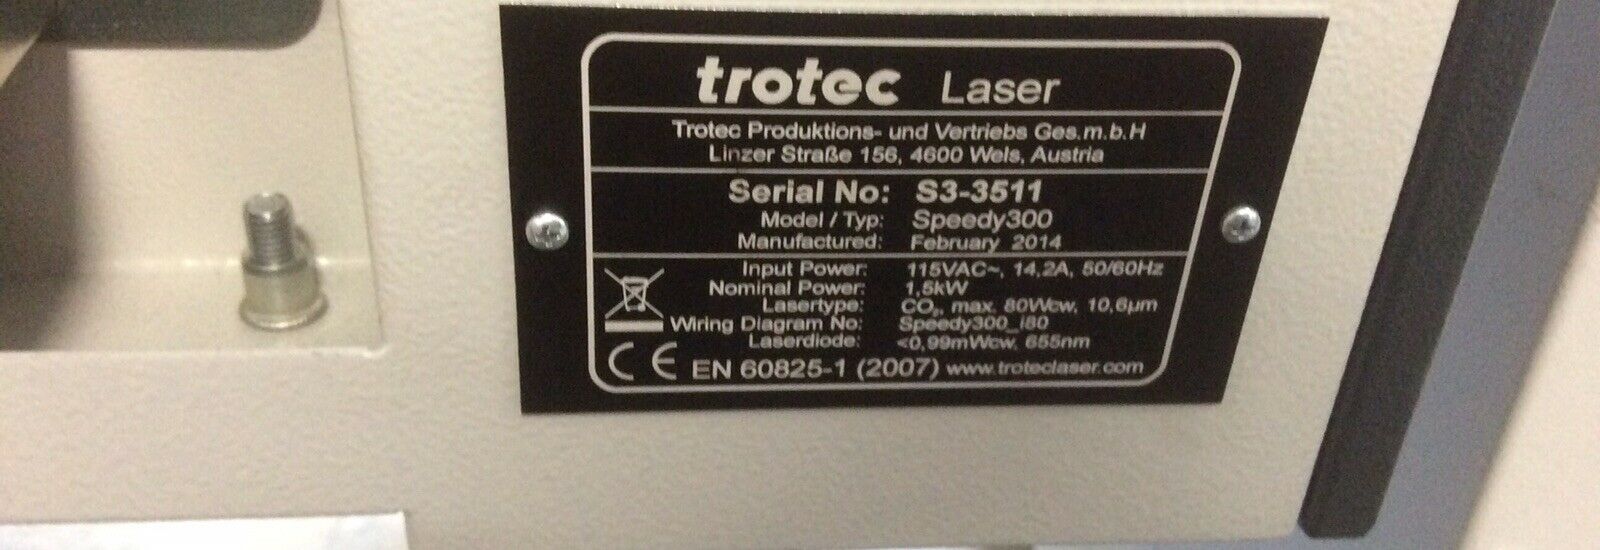 Trotec Laser Cutter/ Engraver Speedy 300 - Trotec Atmos Duo Plus 230 Vac Exhaust - Precision ...